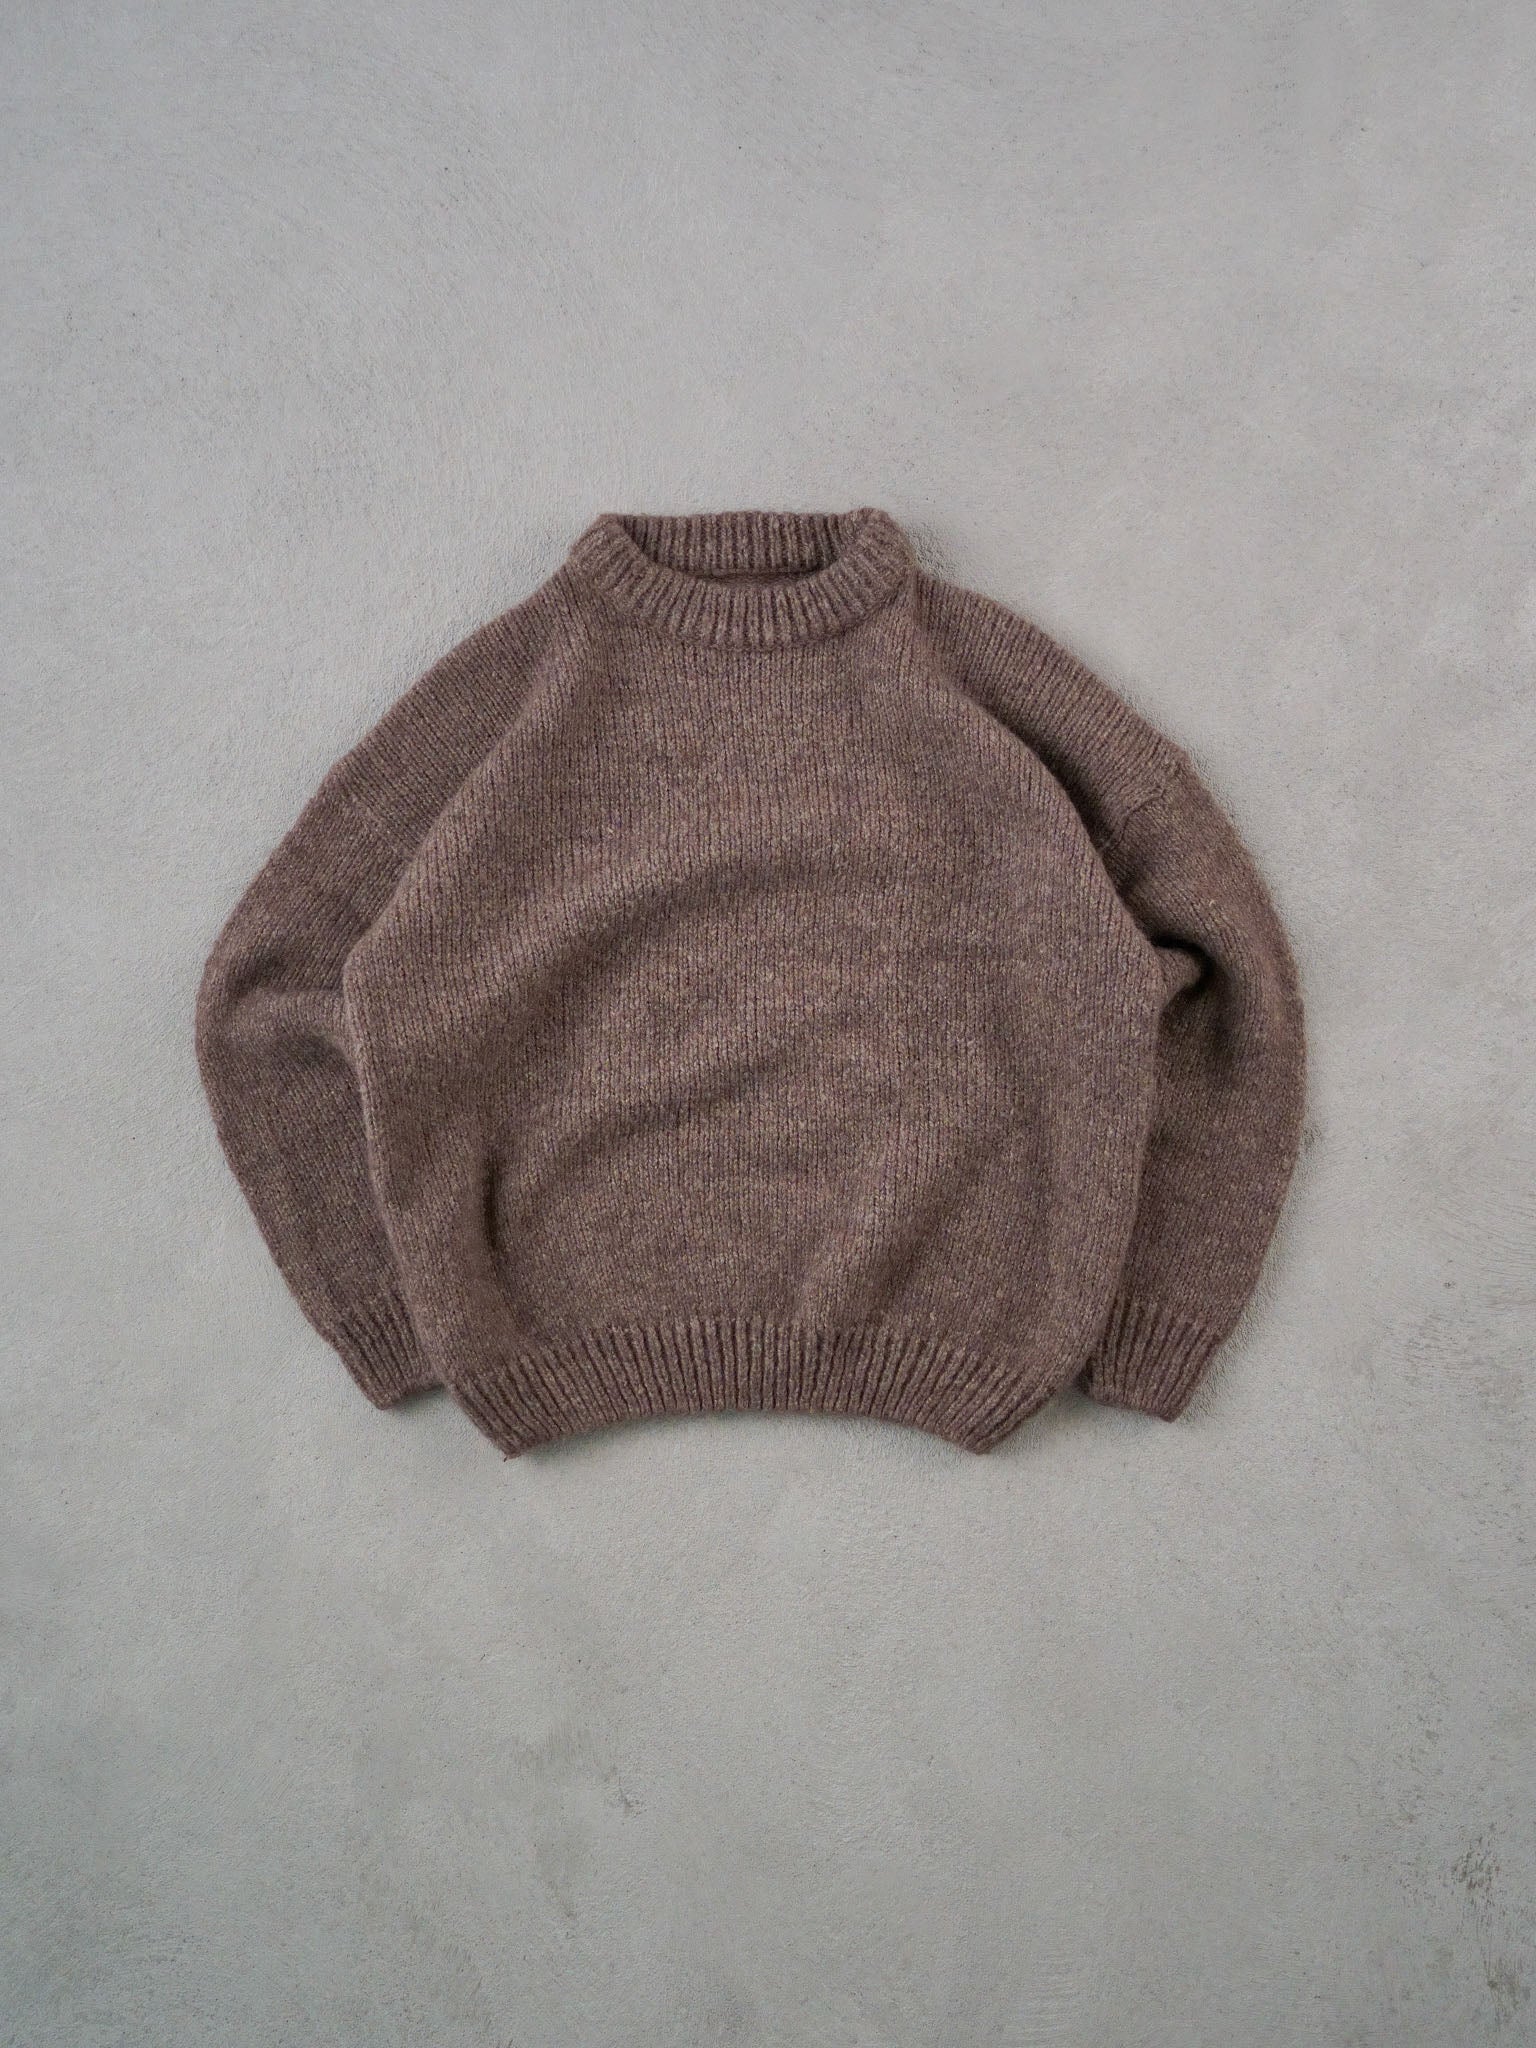 Vintage 80s Brown Knit Sweater (M/L)